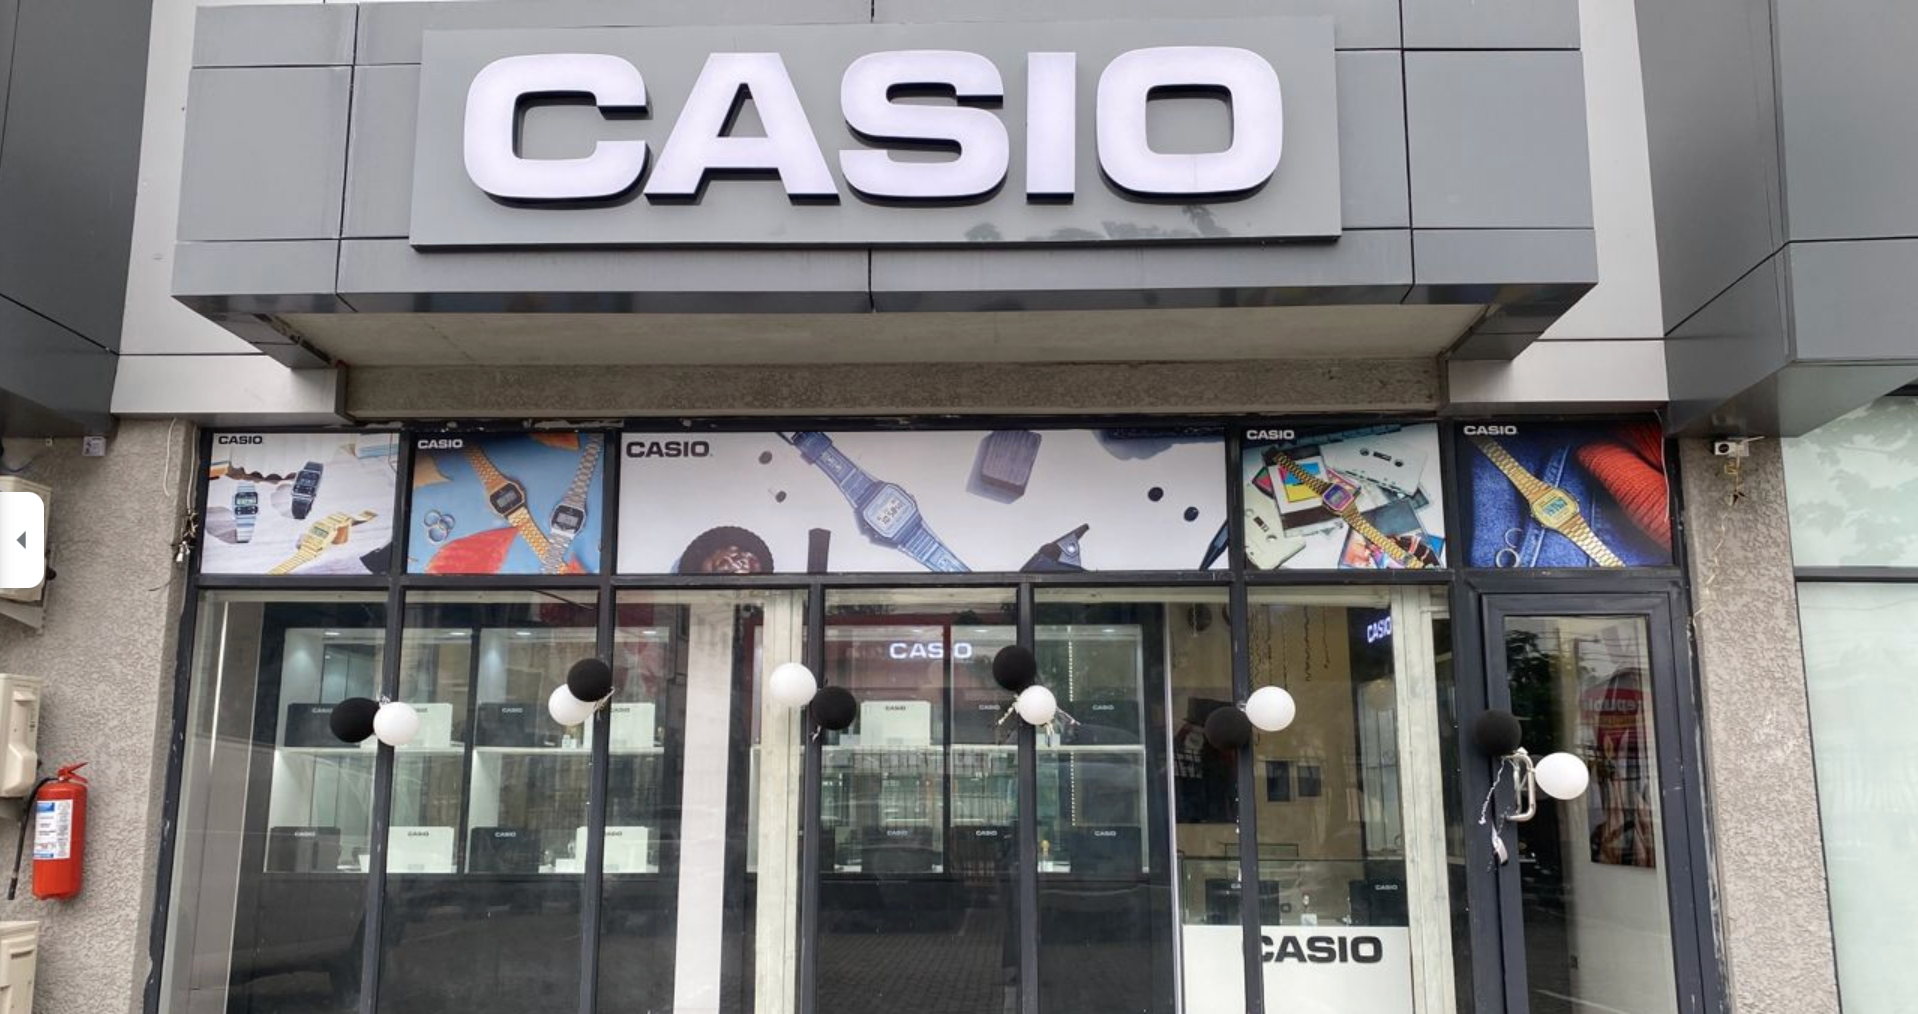 Casio after sales service center in Nigeria